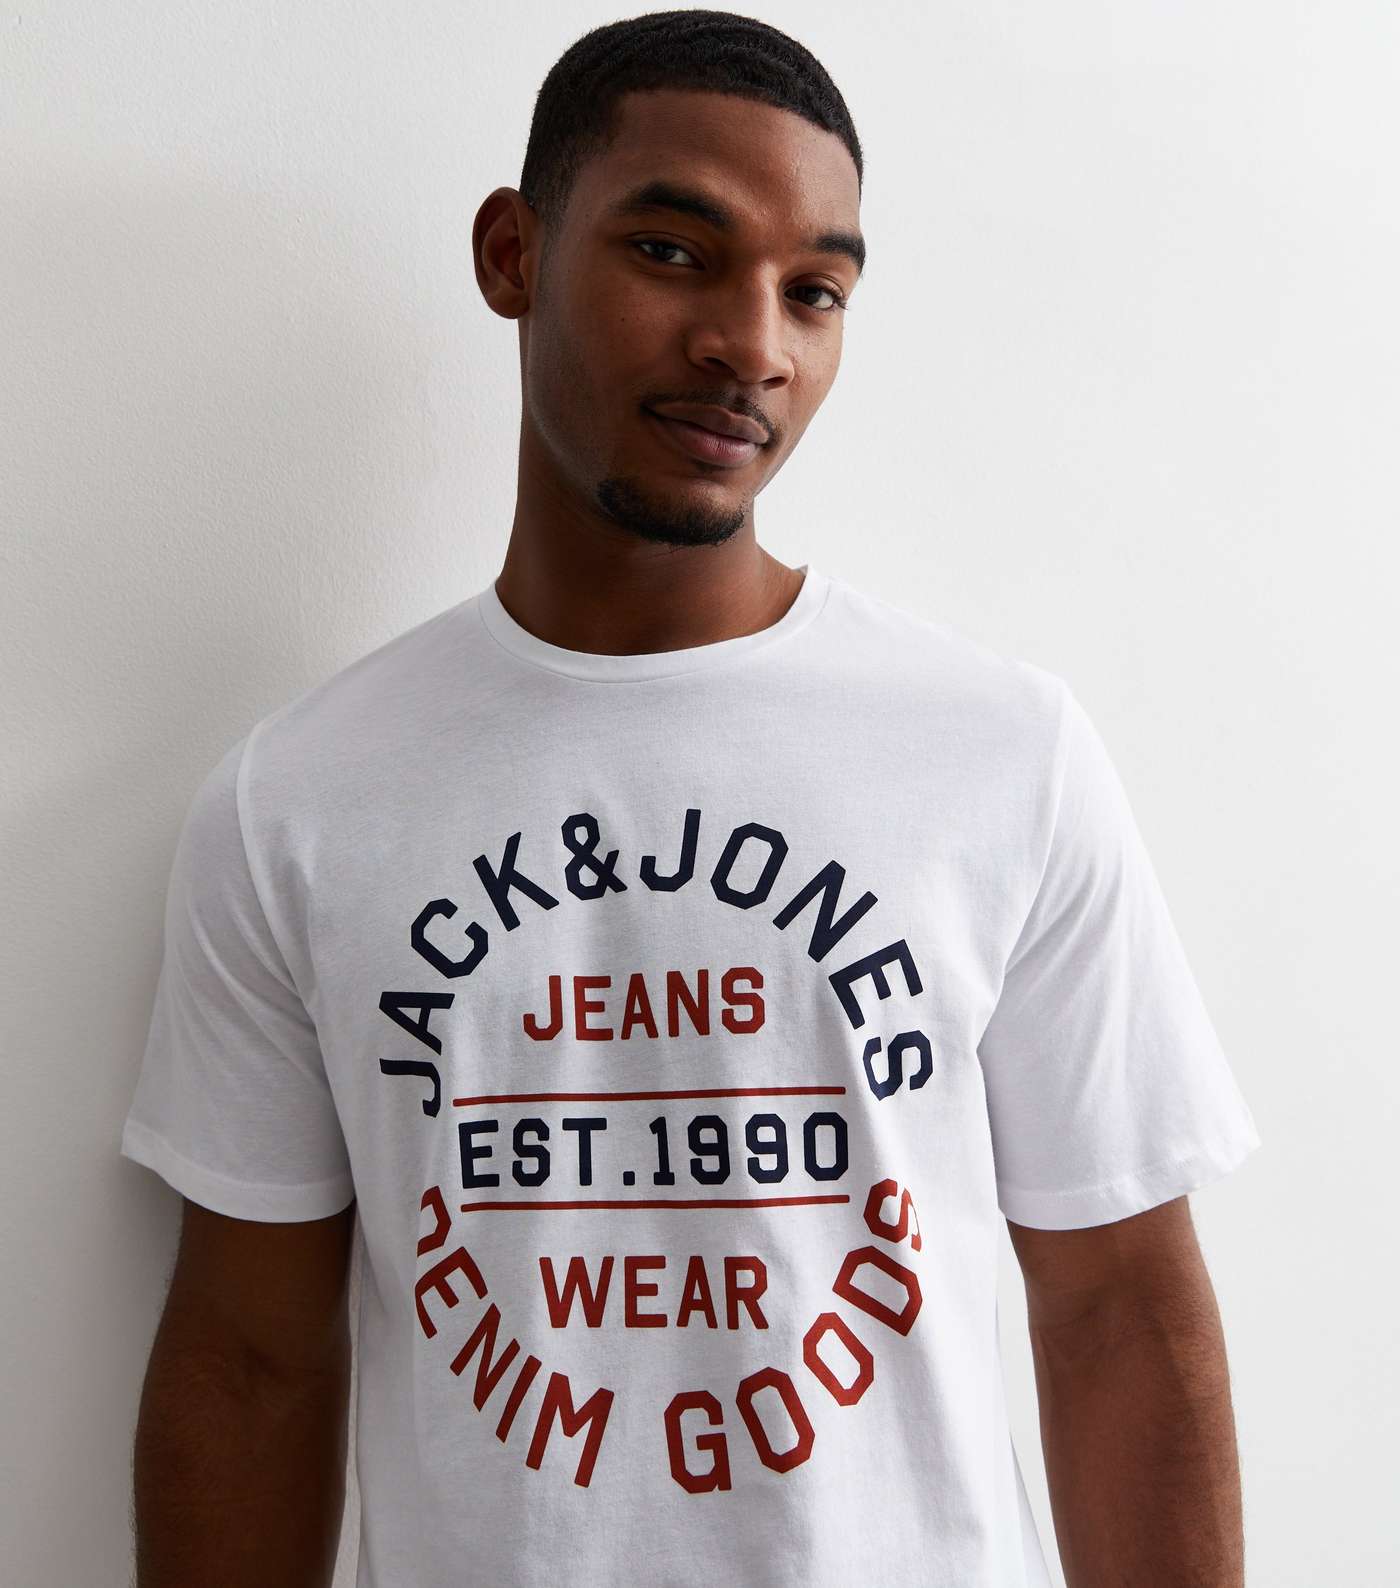 Jack & Jones White Cotton Crew Neck T-Shirt Image 2